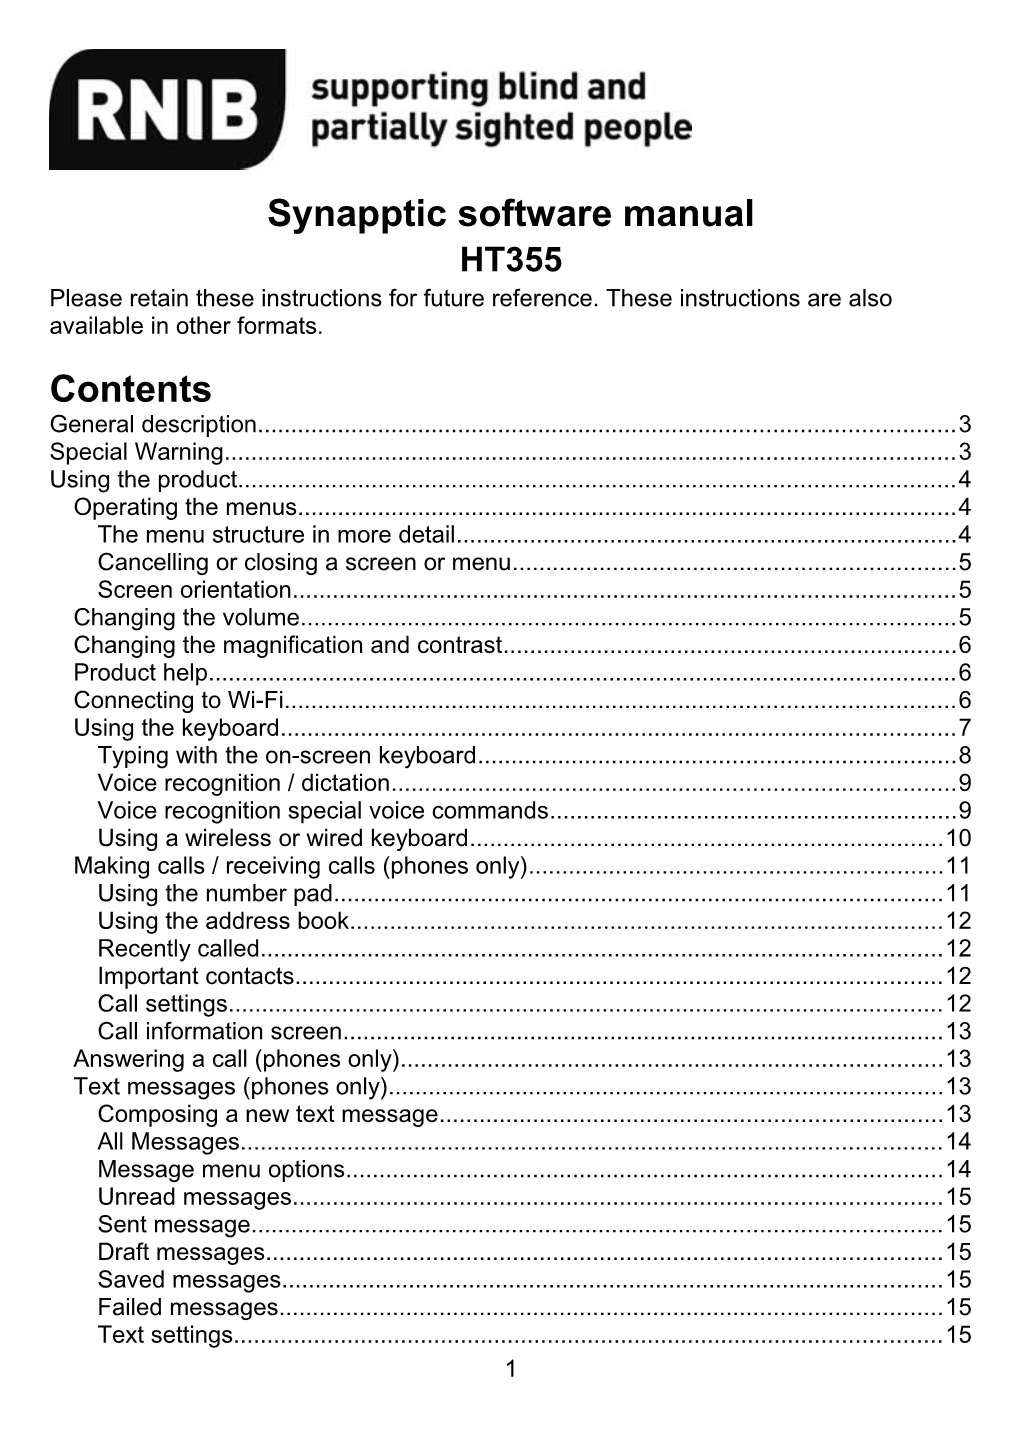 Synapptic Software Manual